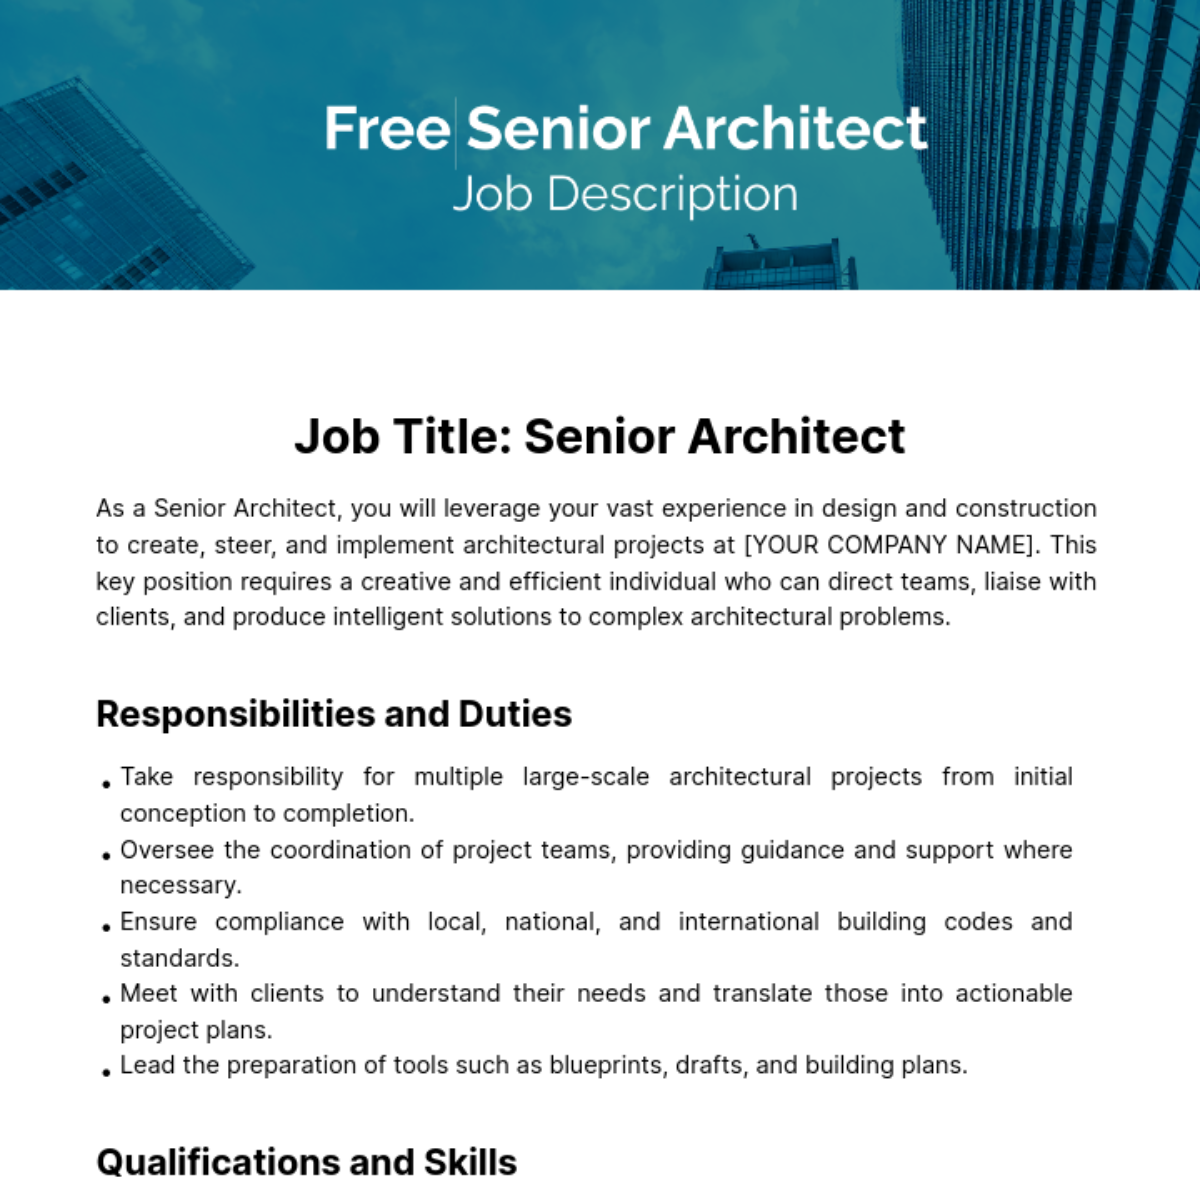 Free Senior Architect Job Description Template